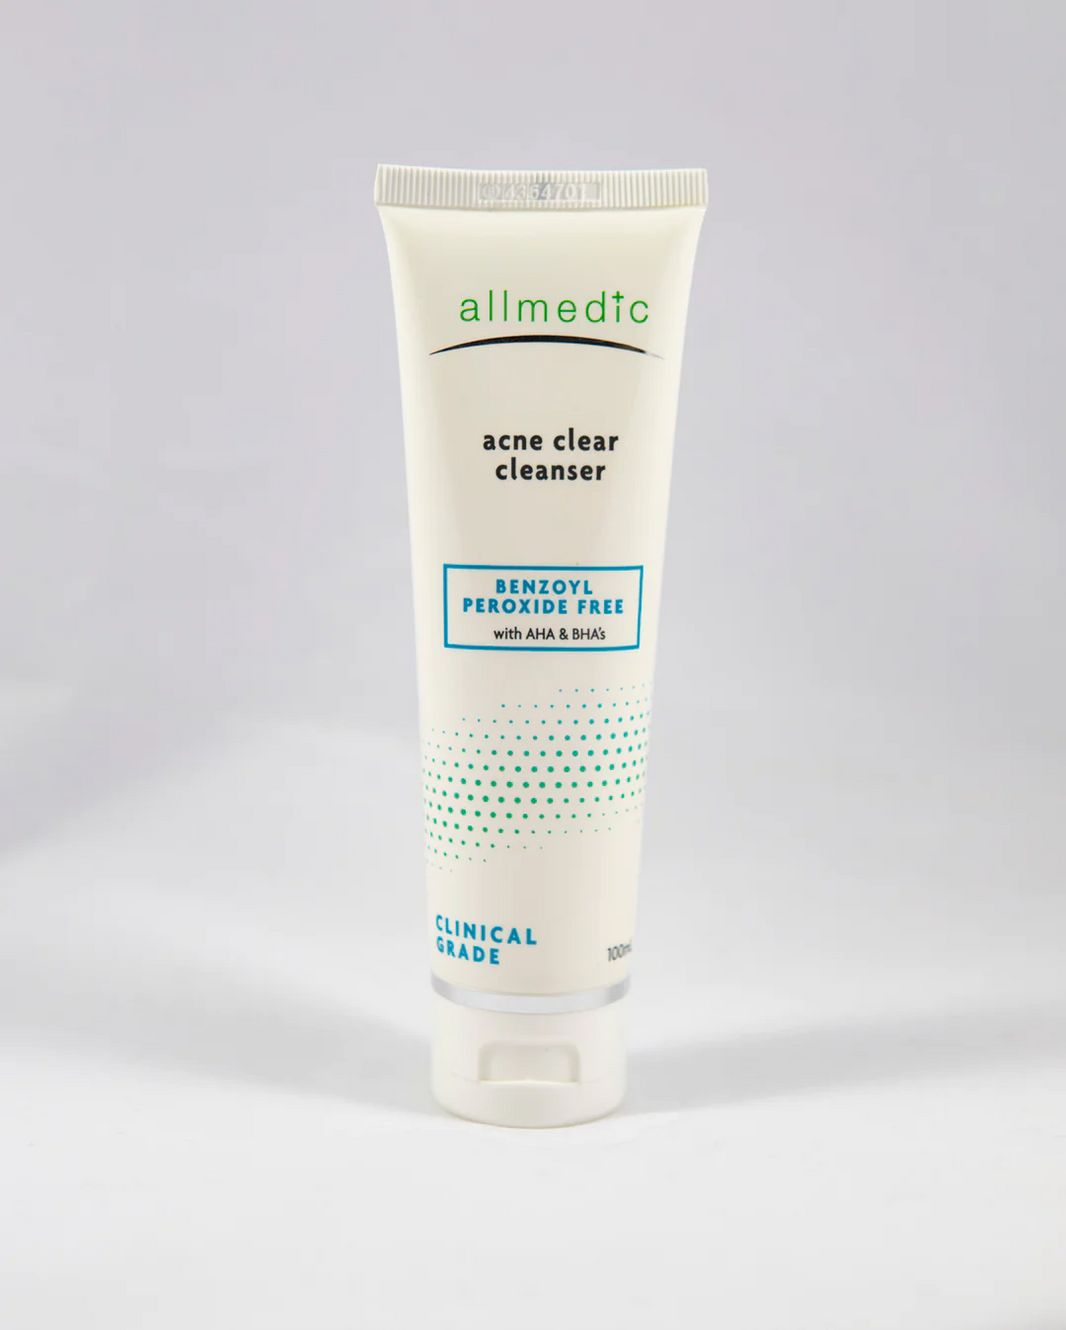 allmedic Acne Clear Cleanser